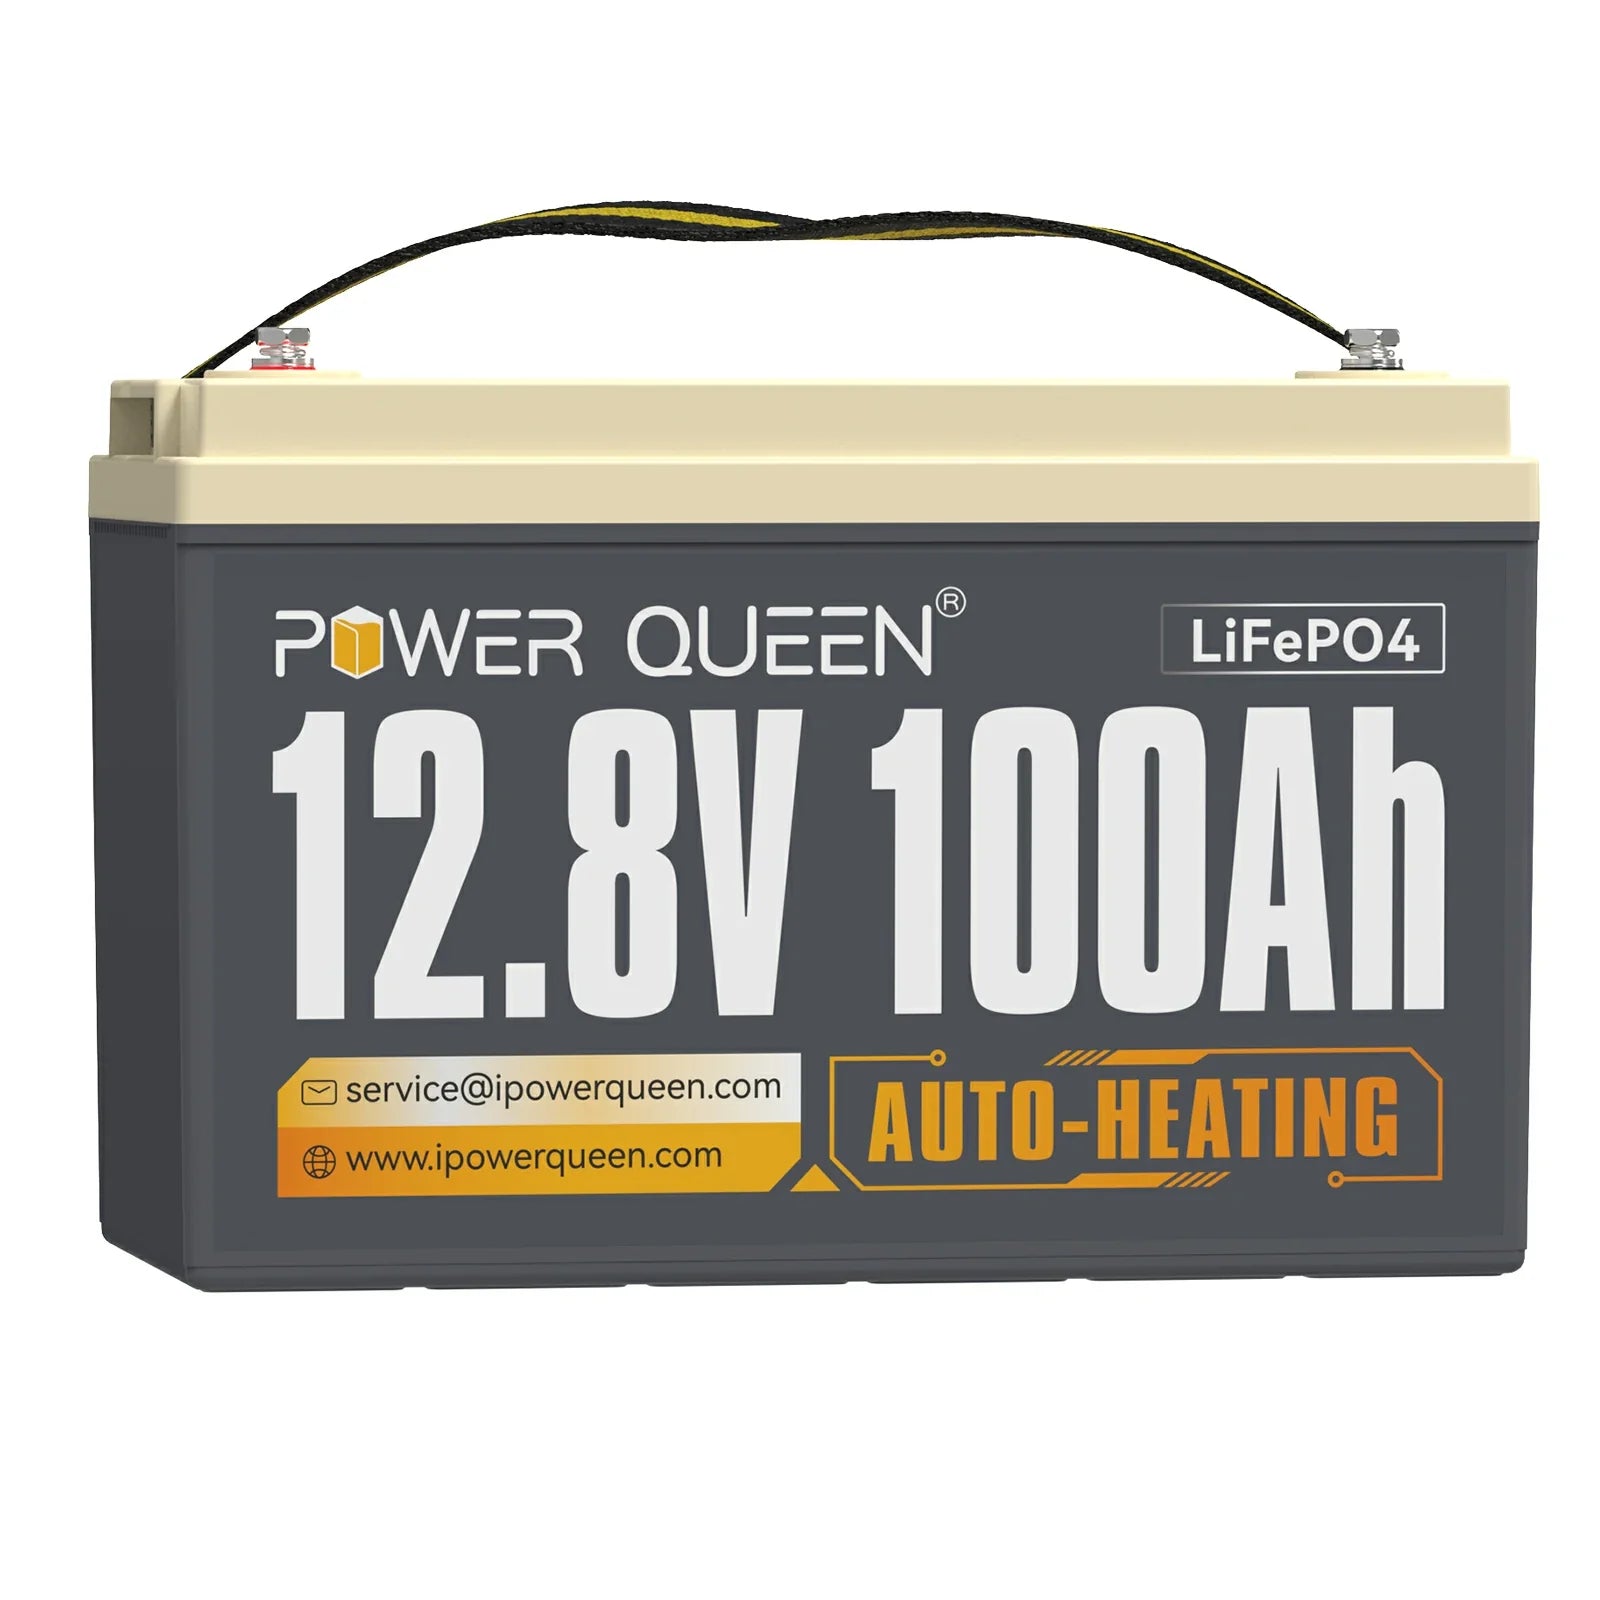 Batterie LiFePO4 auto-chauffante Power Queen 12,8 V 100 Ah, BMS 100 A intégré